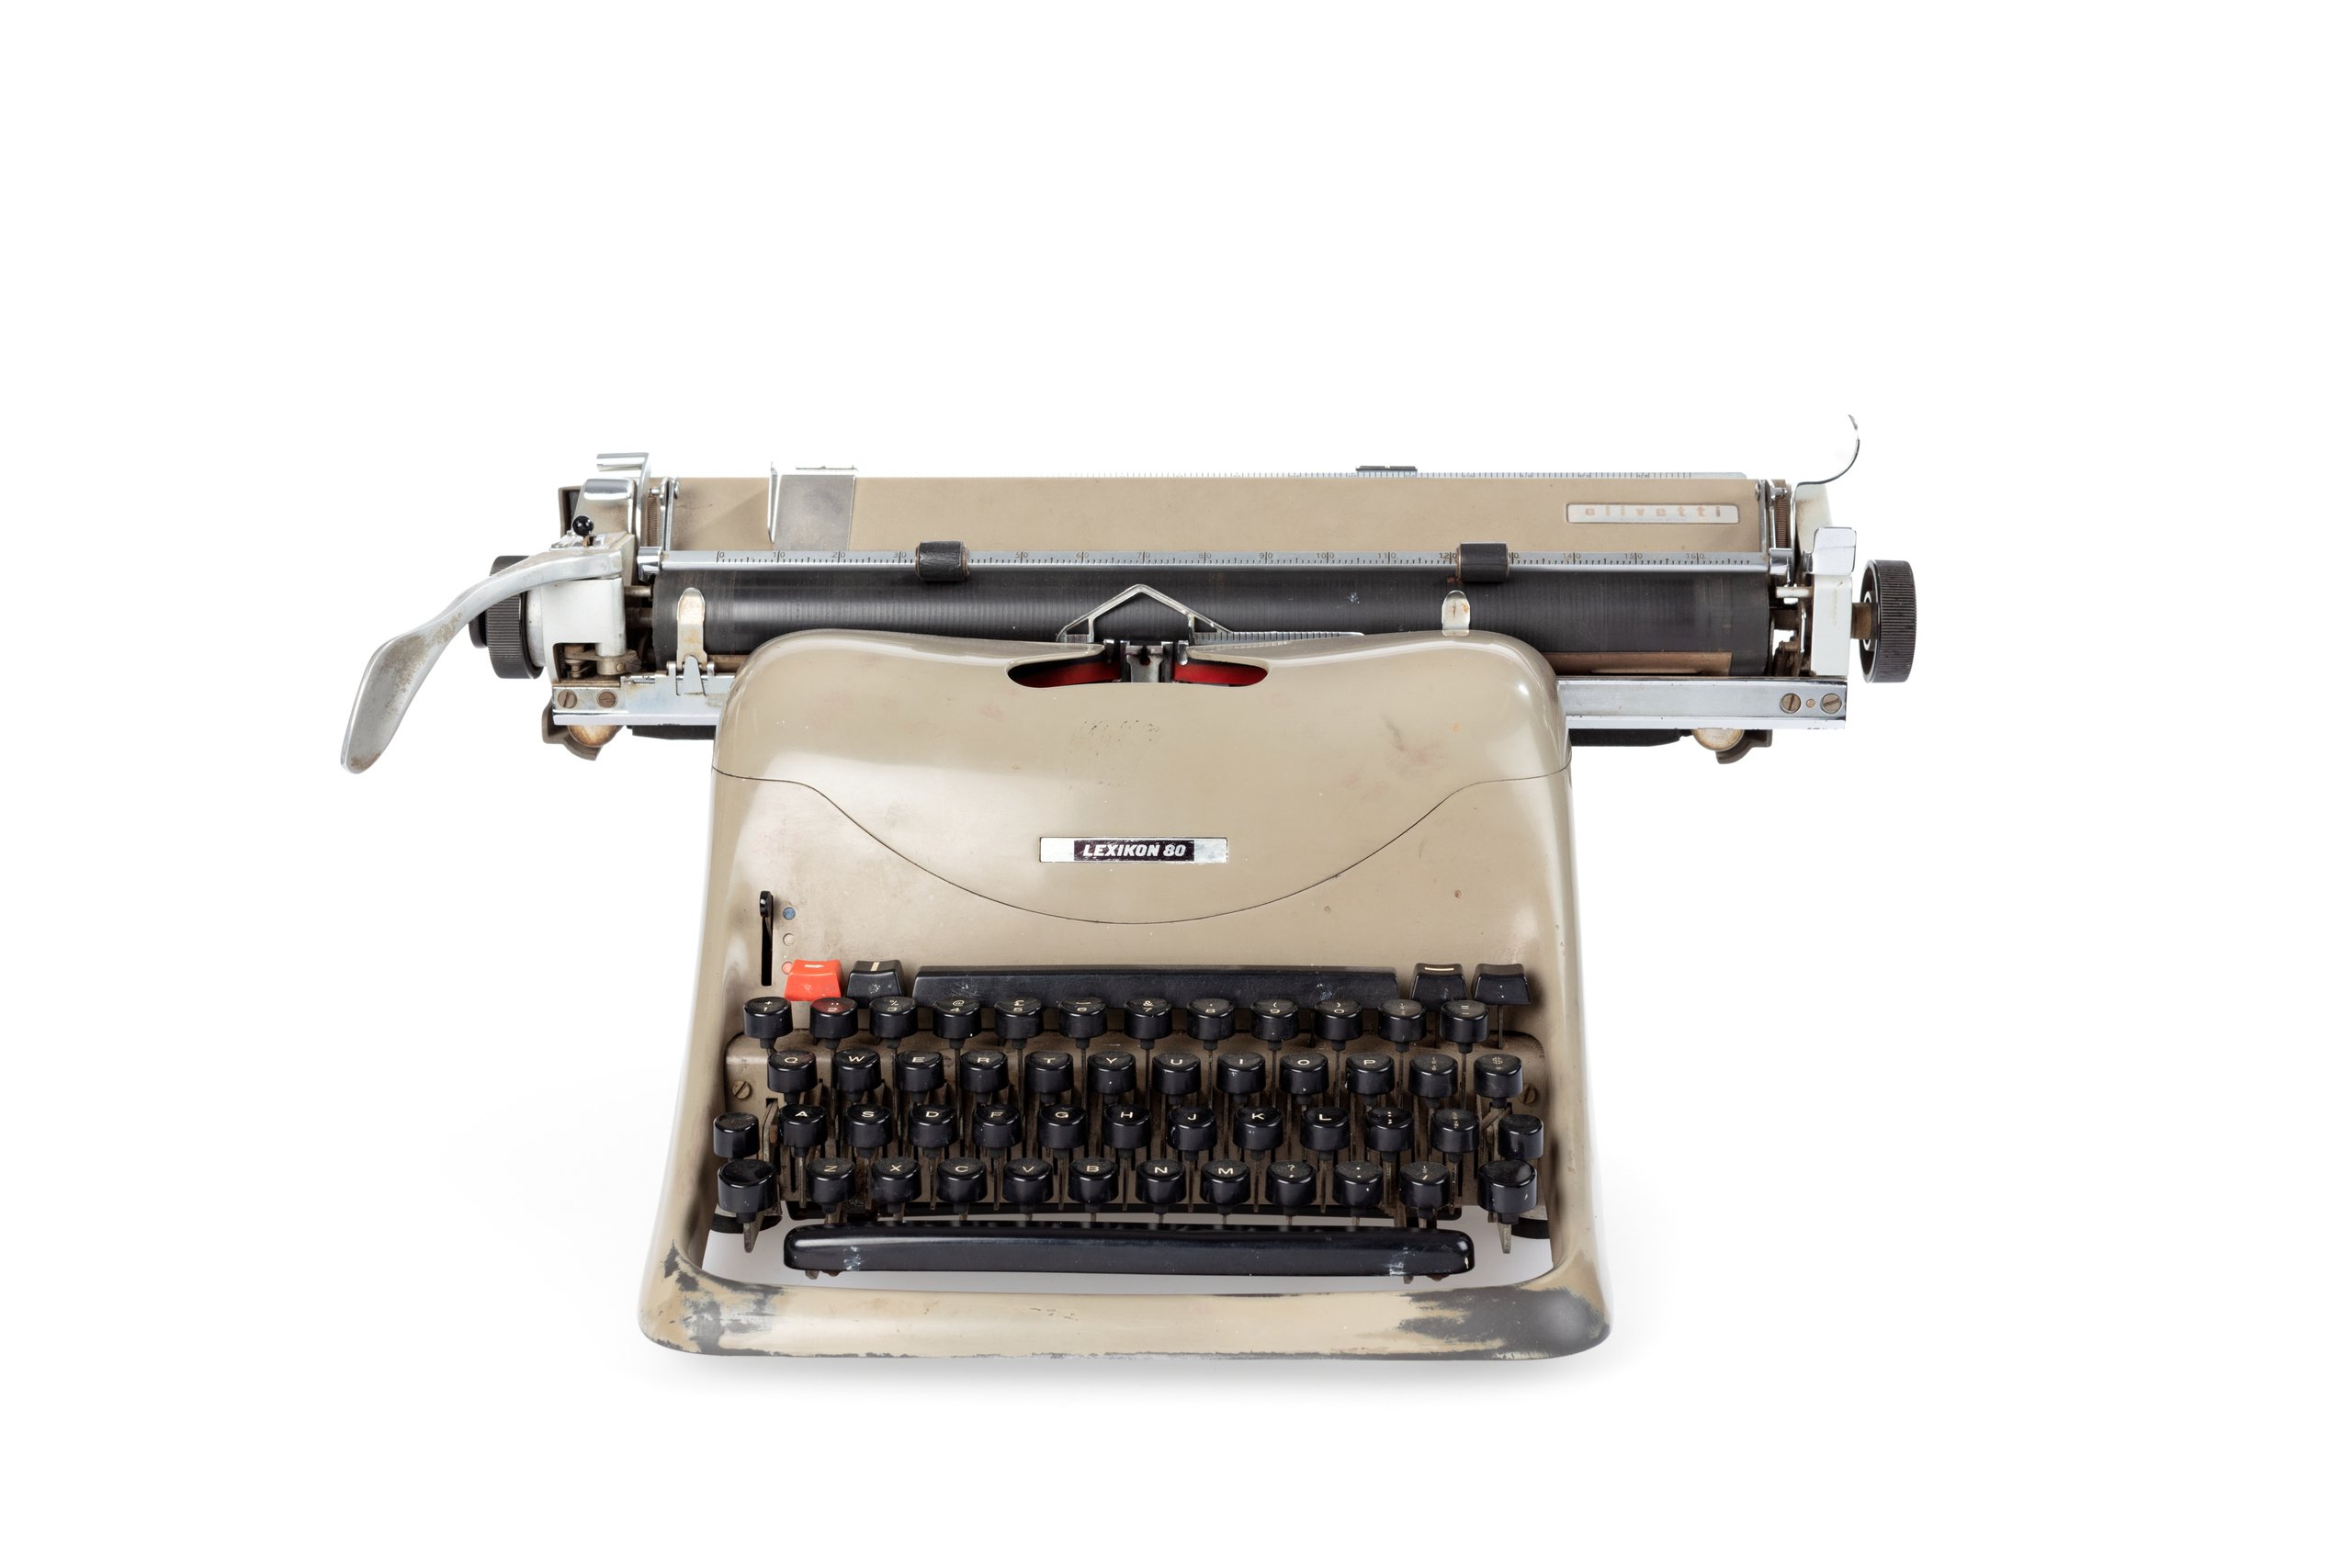 'Lexicon 80' typewriter made by British Olivetti Ltd